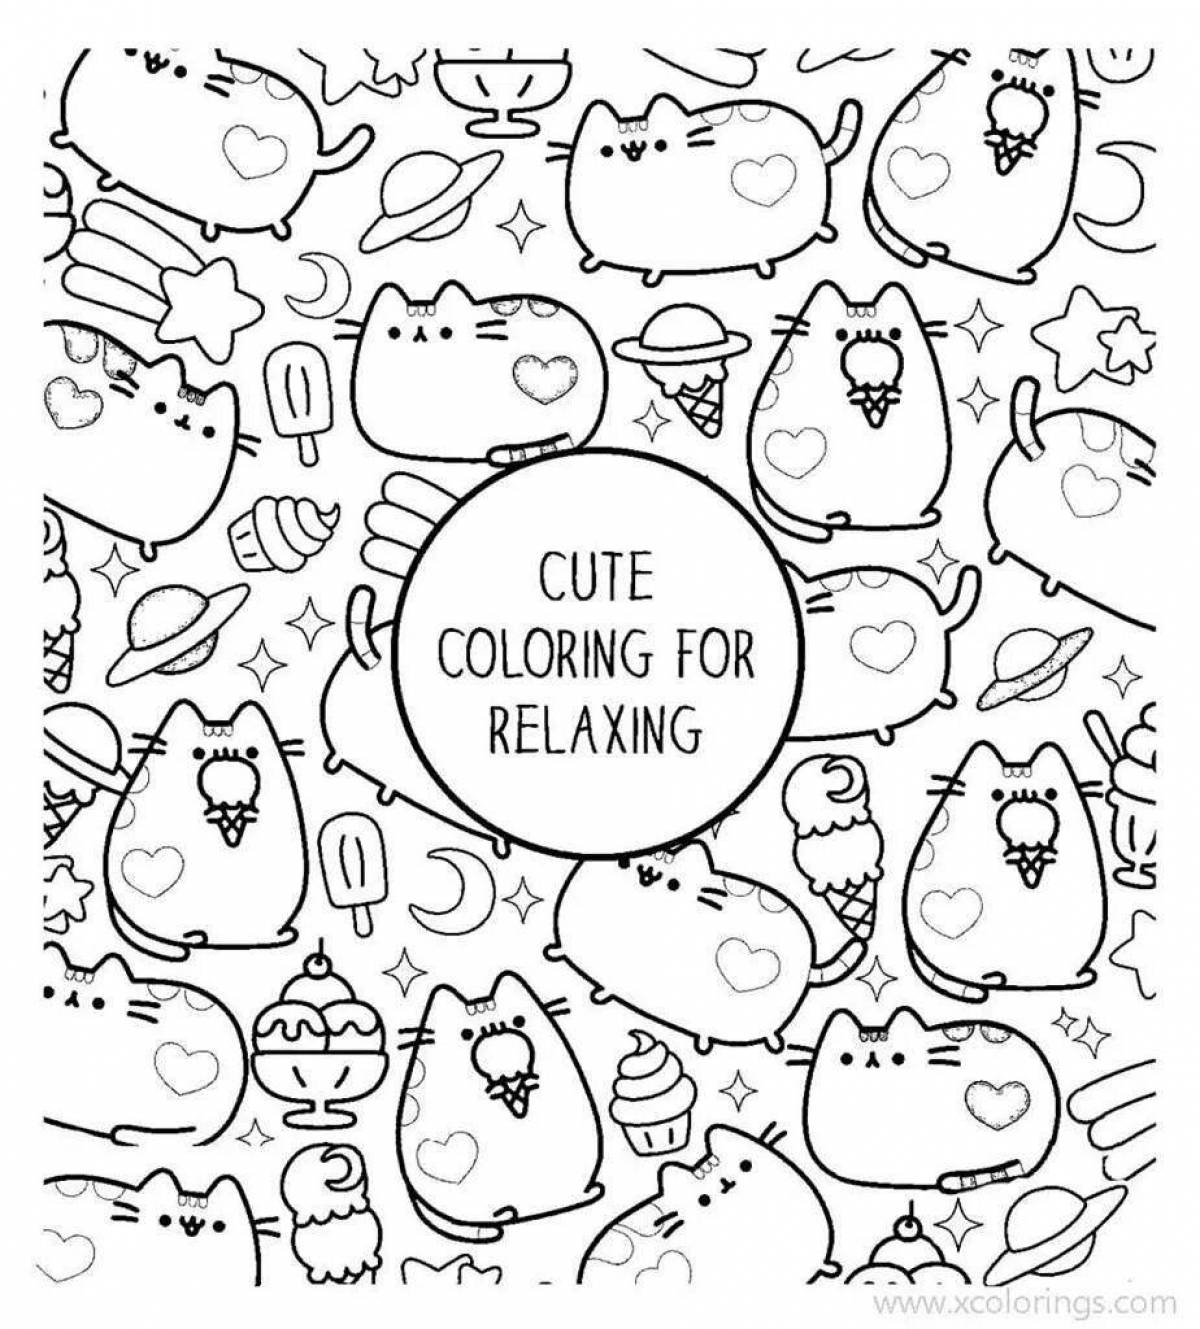 Joyful coloring lot of fur